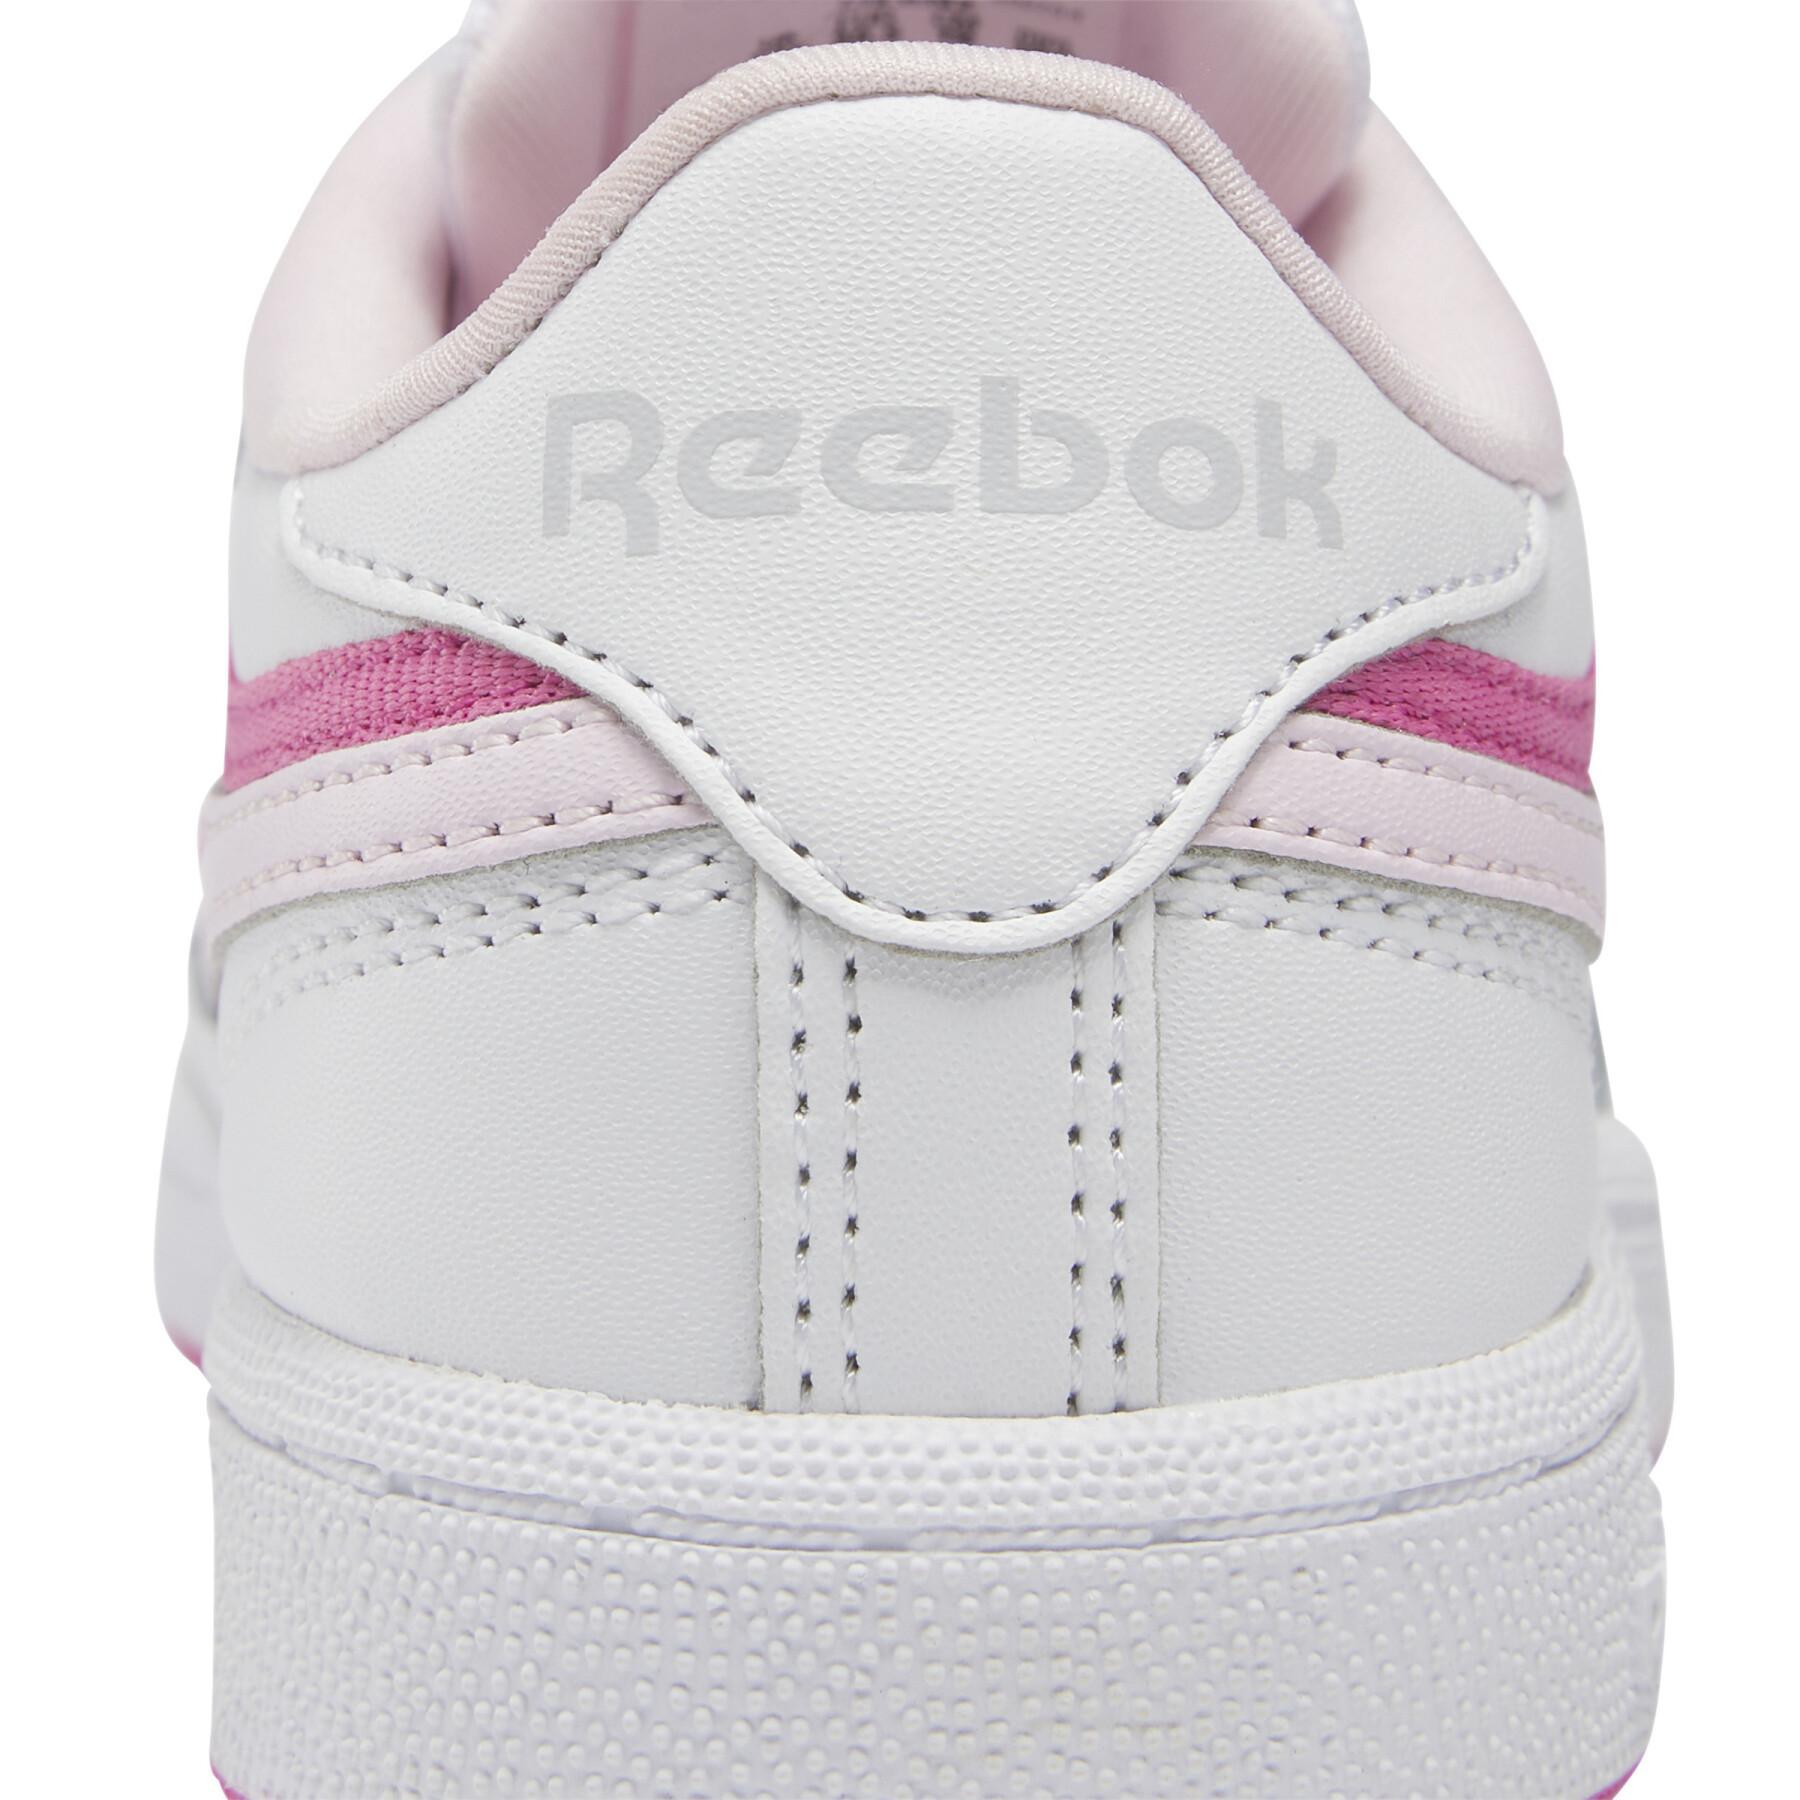 Children's sneakers Reebok Club C Revenge